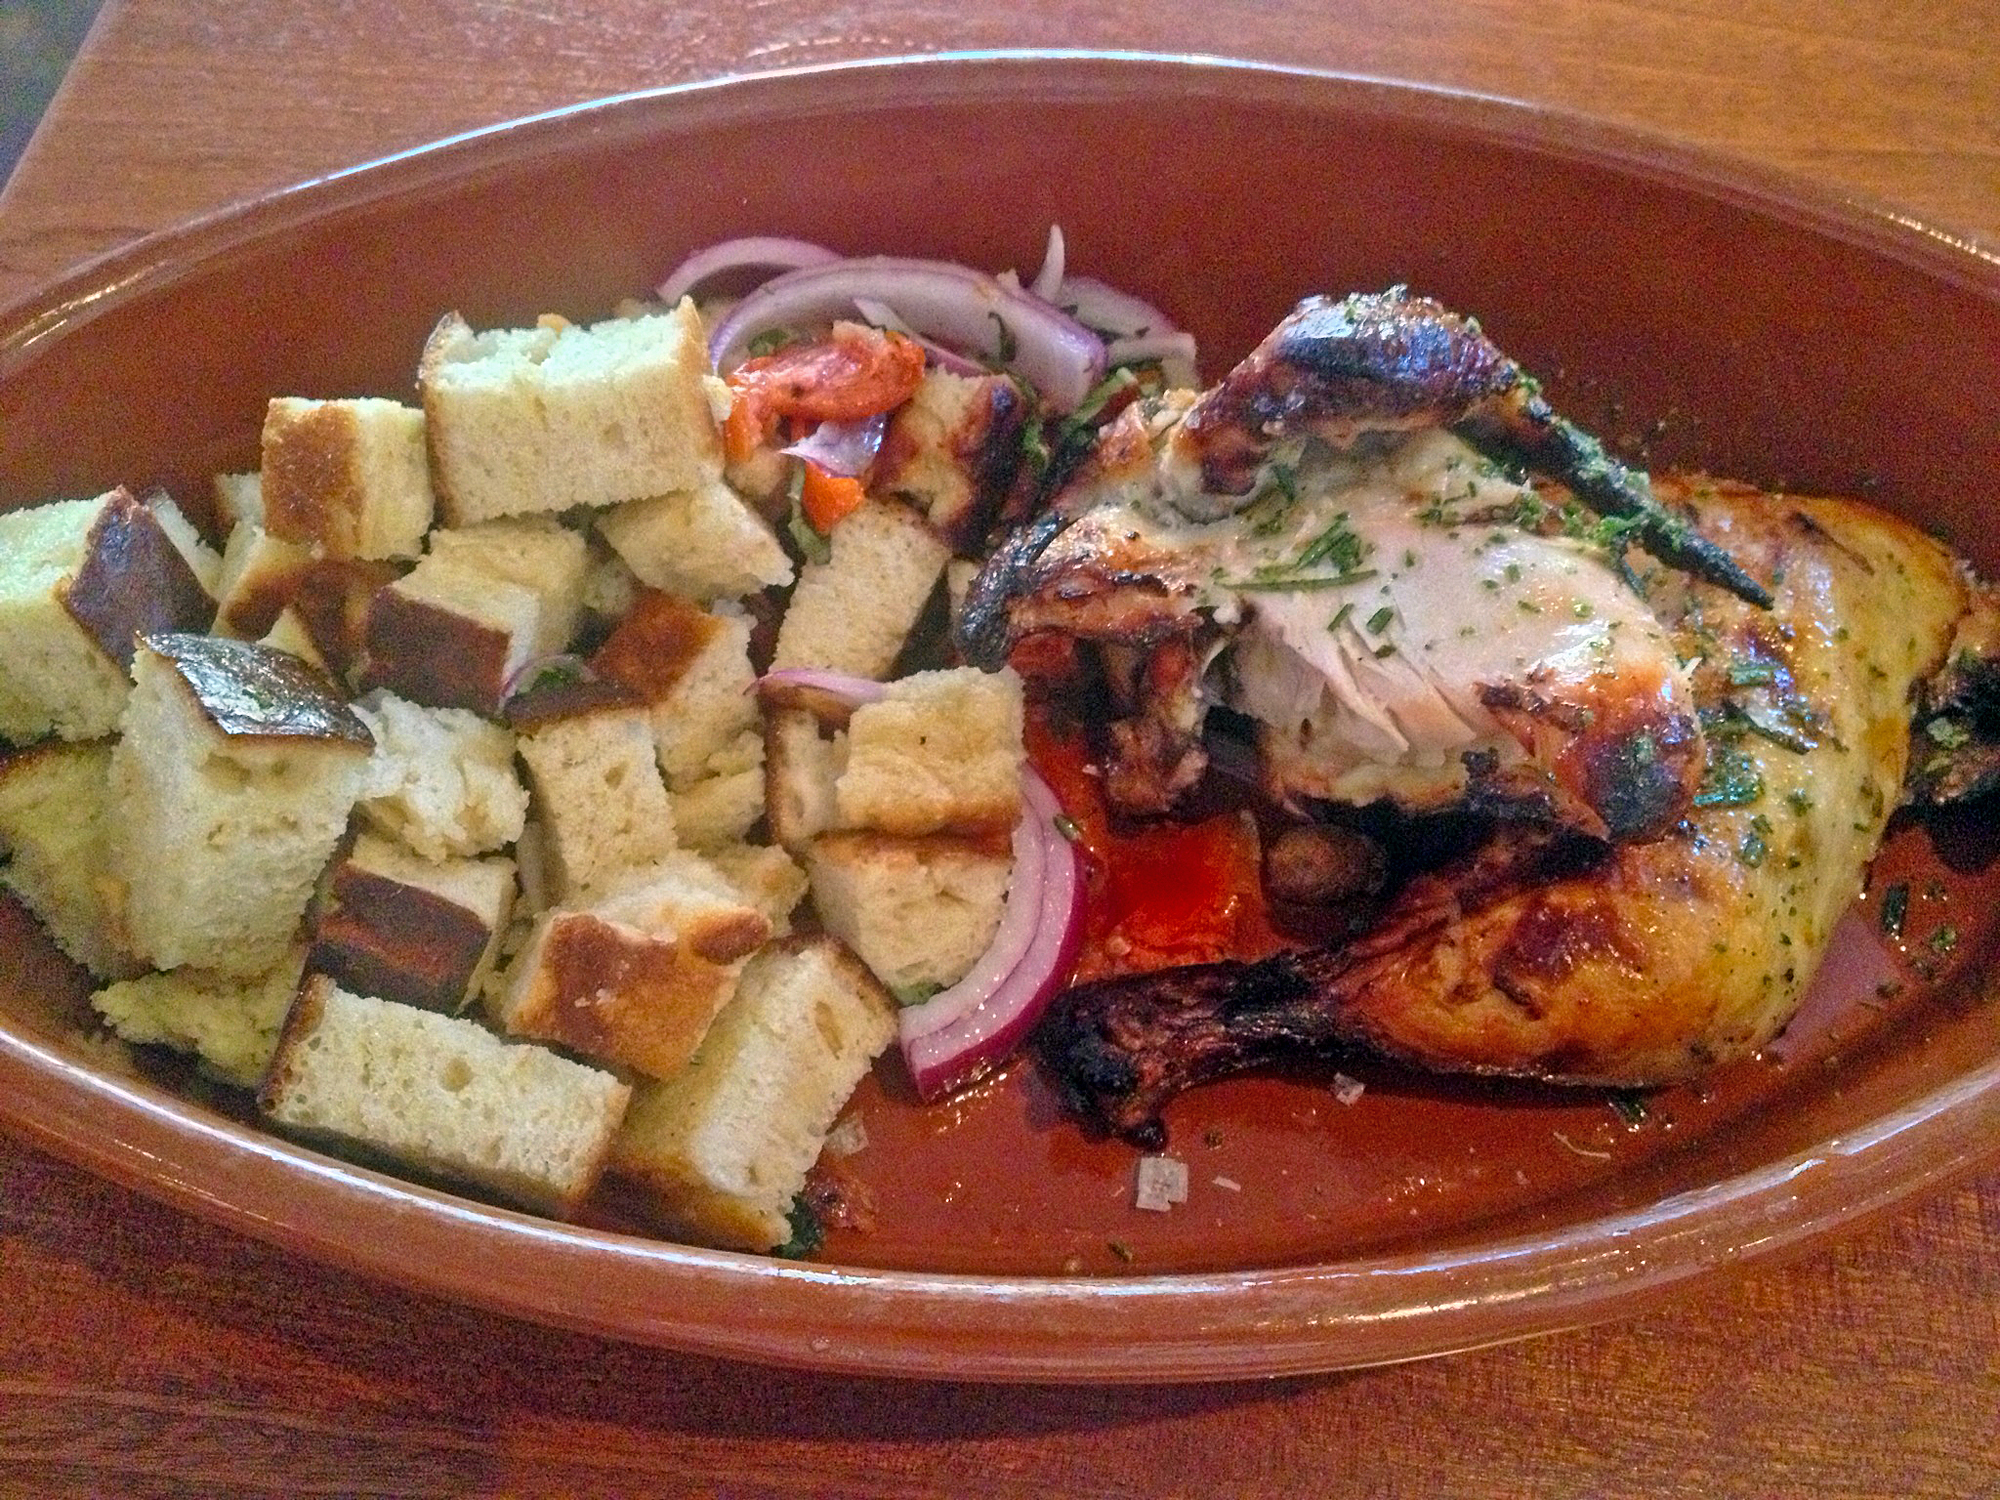 Pollo Arrosto, the half roast chicken at Mercato.